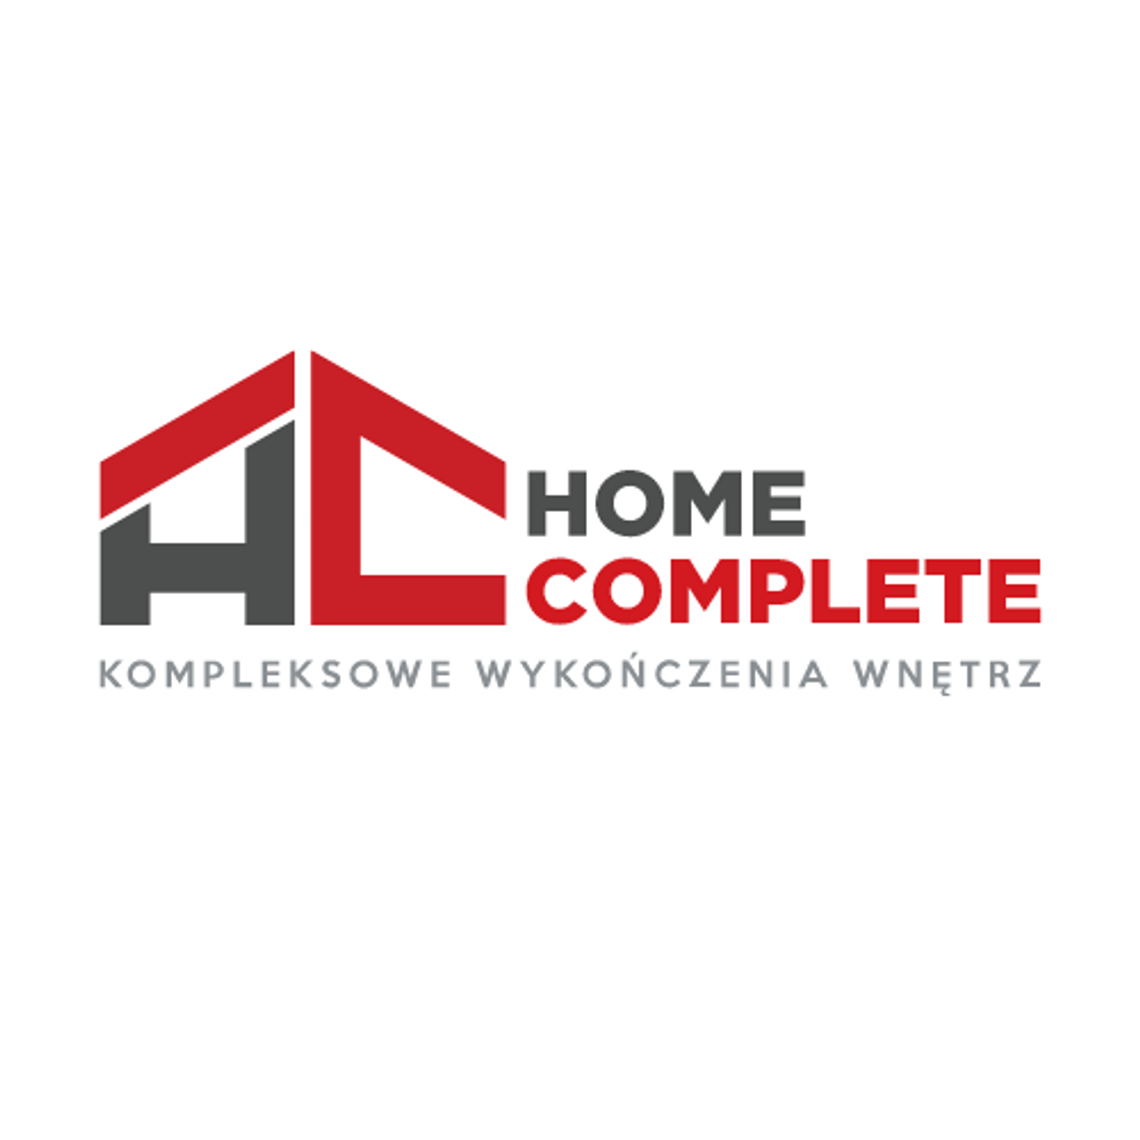 Home Complete - firma remontowa